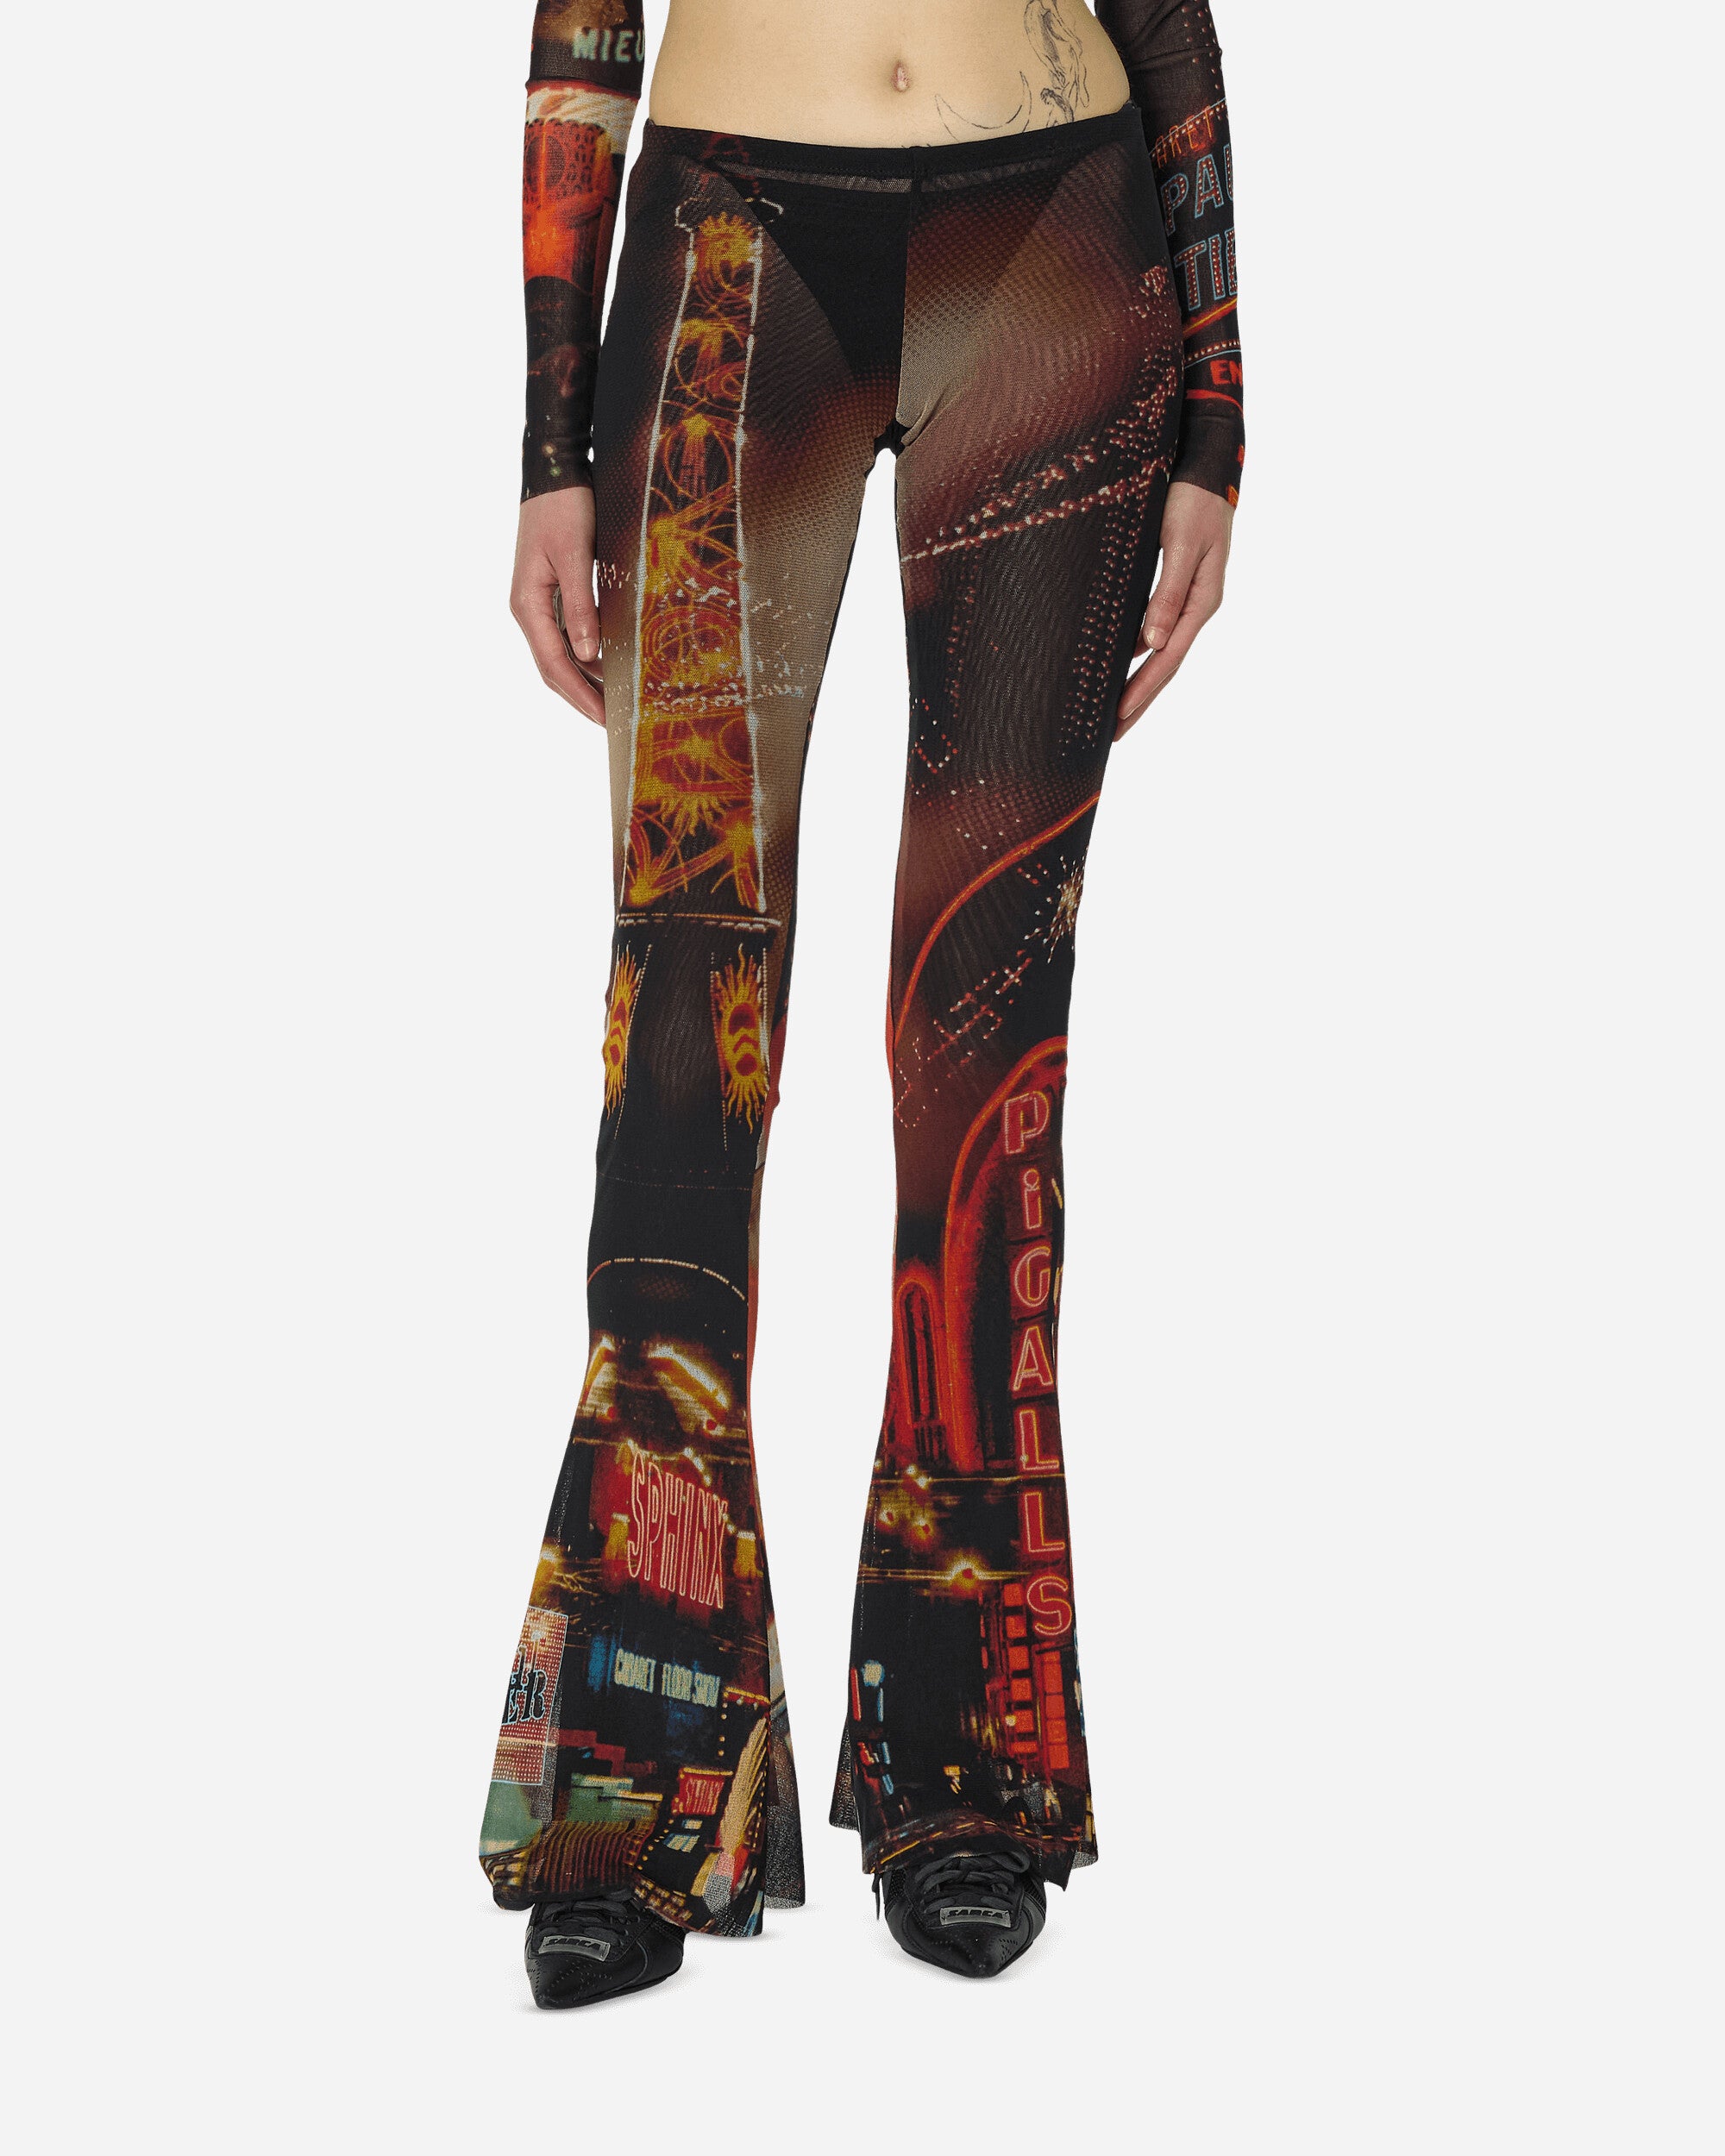 Jean Paul Gaultier Wmns Mesh Flare Trouse Multi Pants Flare PA157-T552 00301550